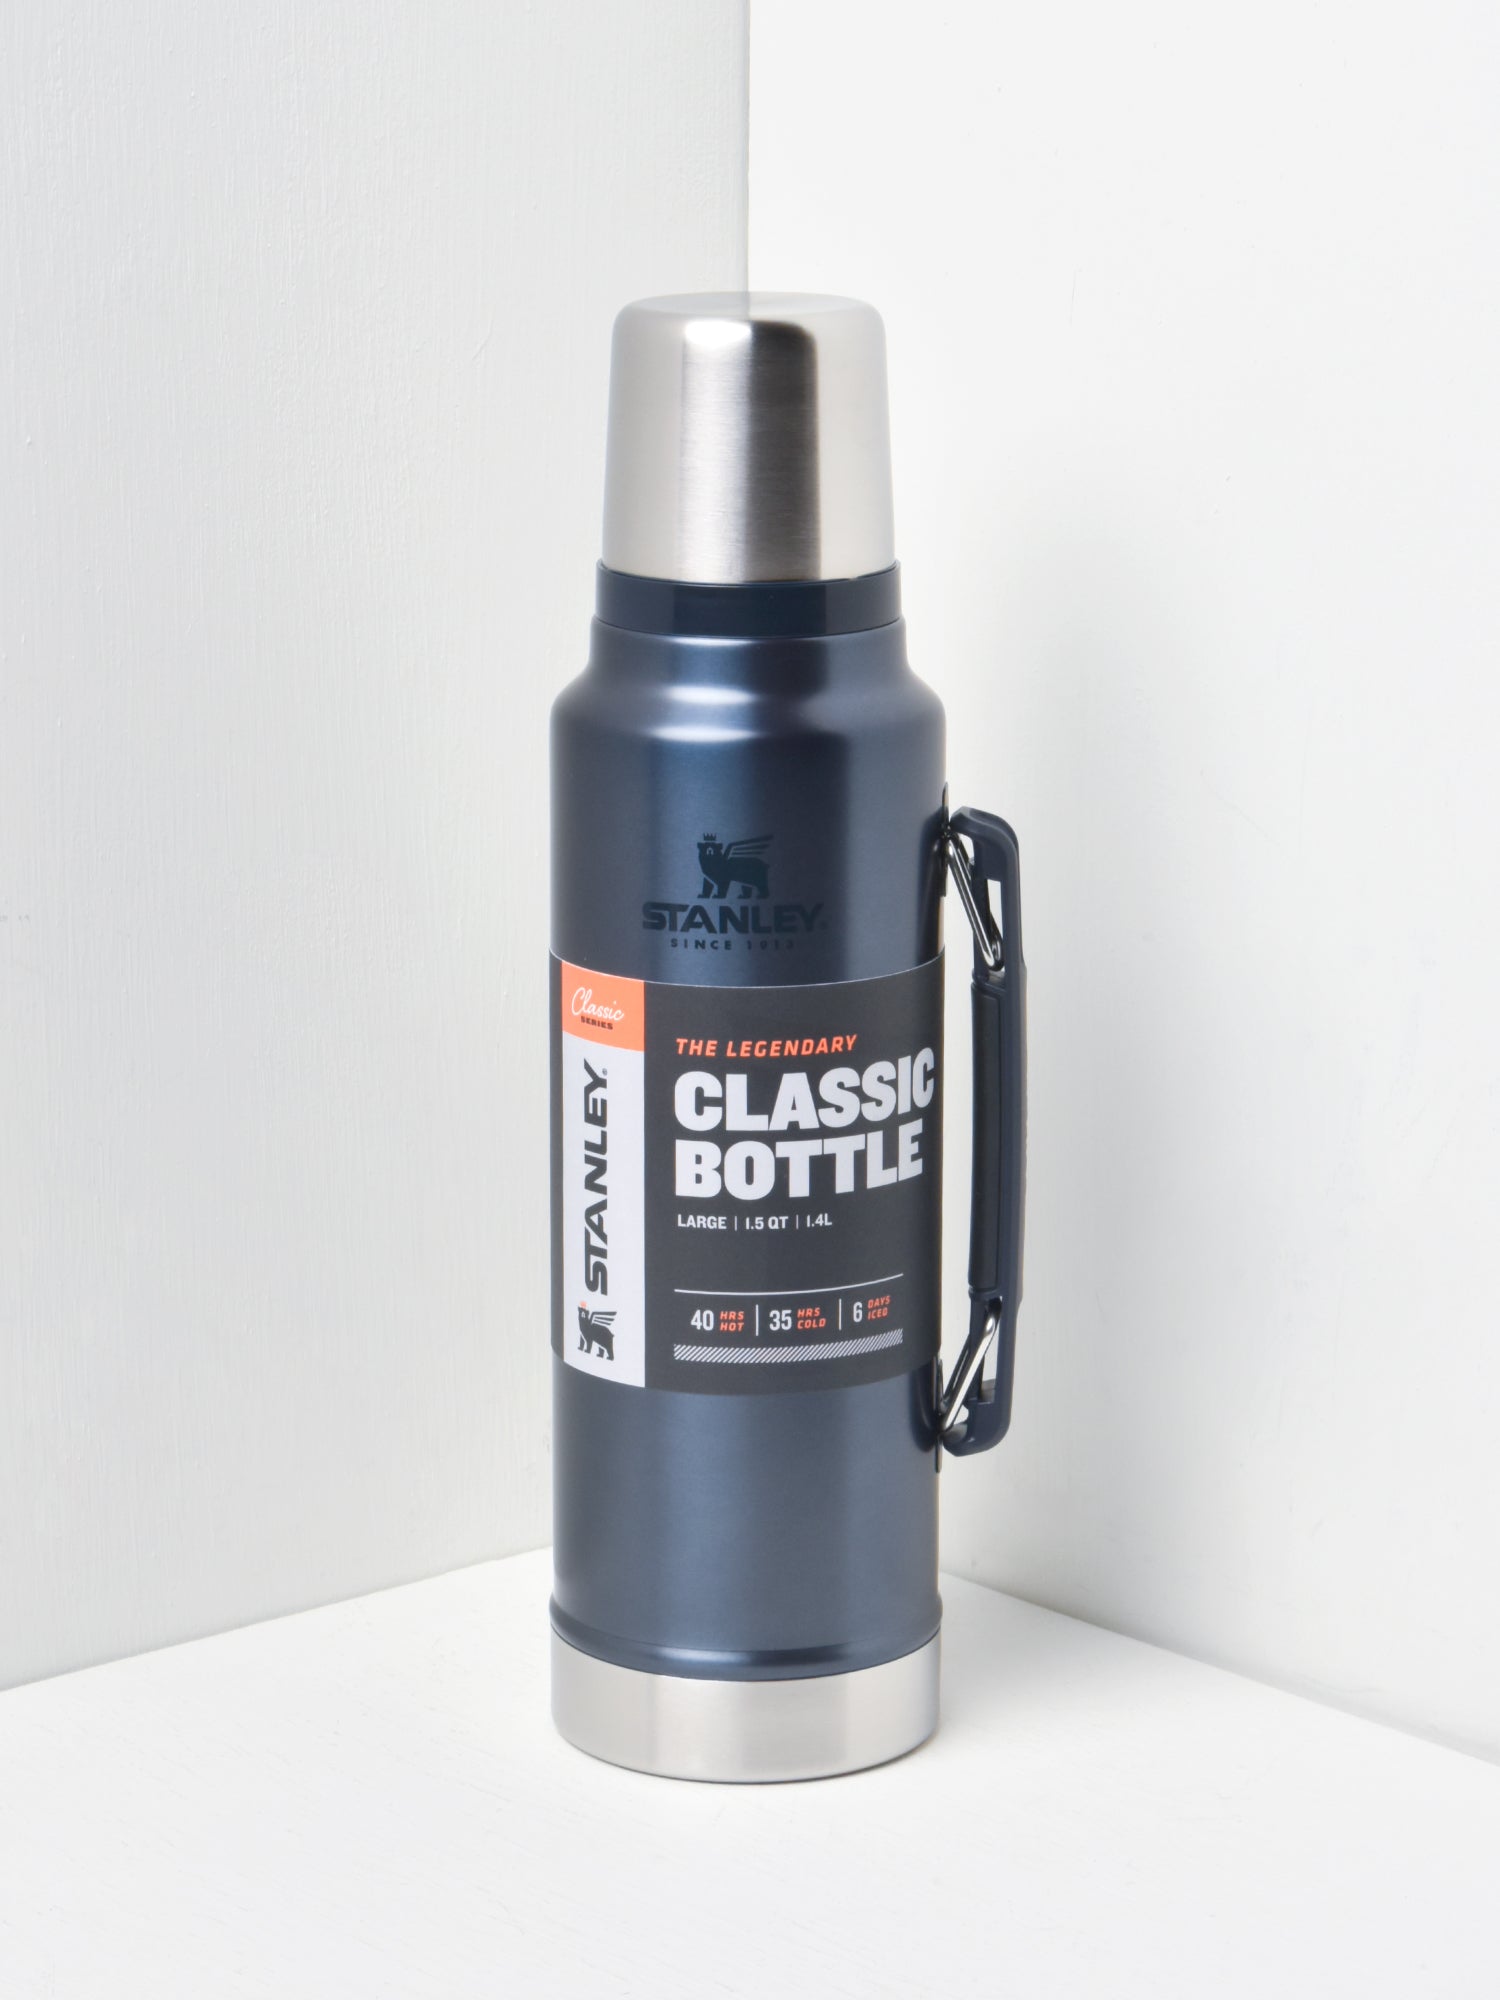 Stanley Thermal Bottle, Classic Legendary Bottle Large 1.5qt /1.4